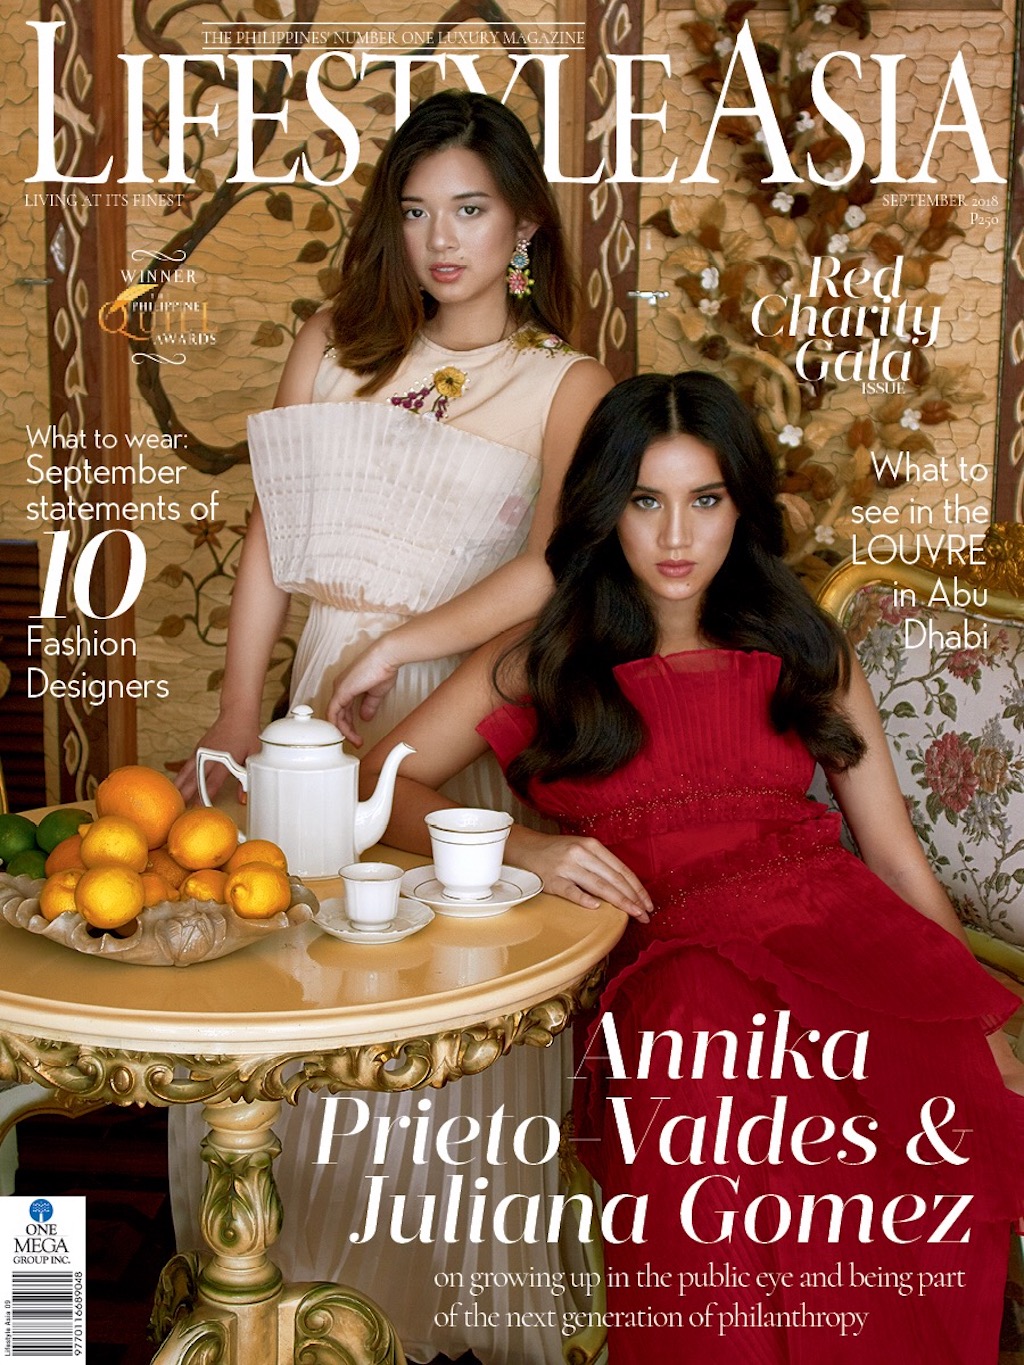 Lifestyle Asia Cover, September 2018 featuring Juliana Gomez and Annika Prieto Valdes (Photograph by Yukie Sarto)